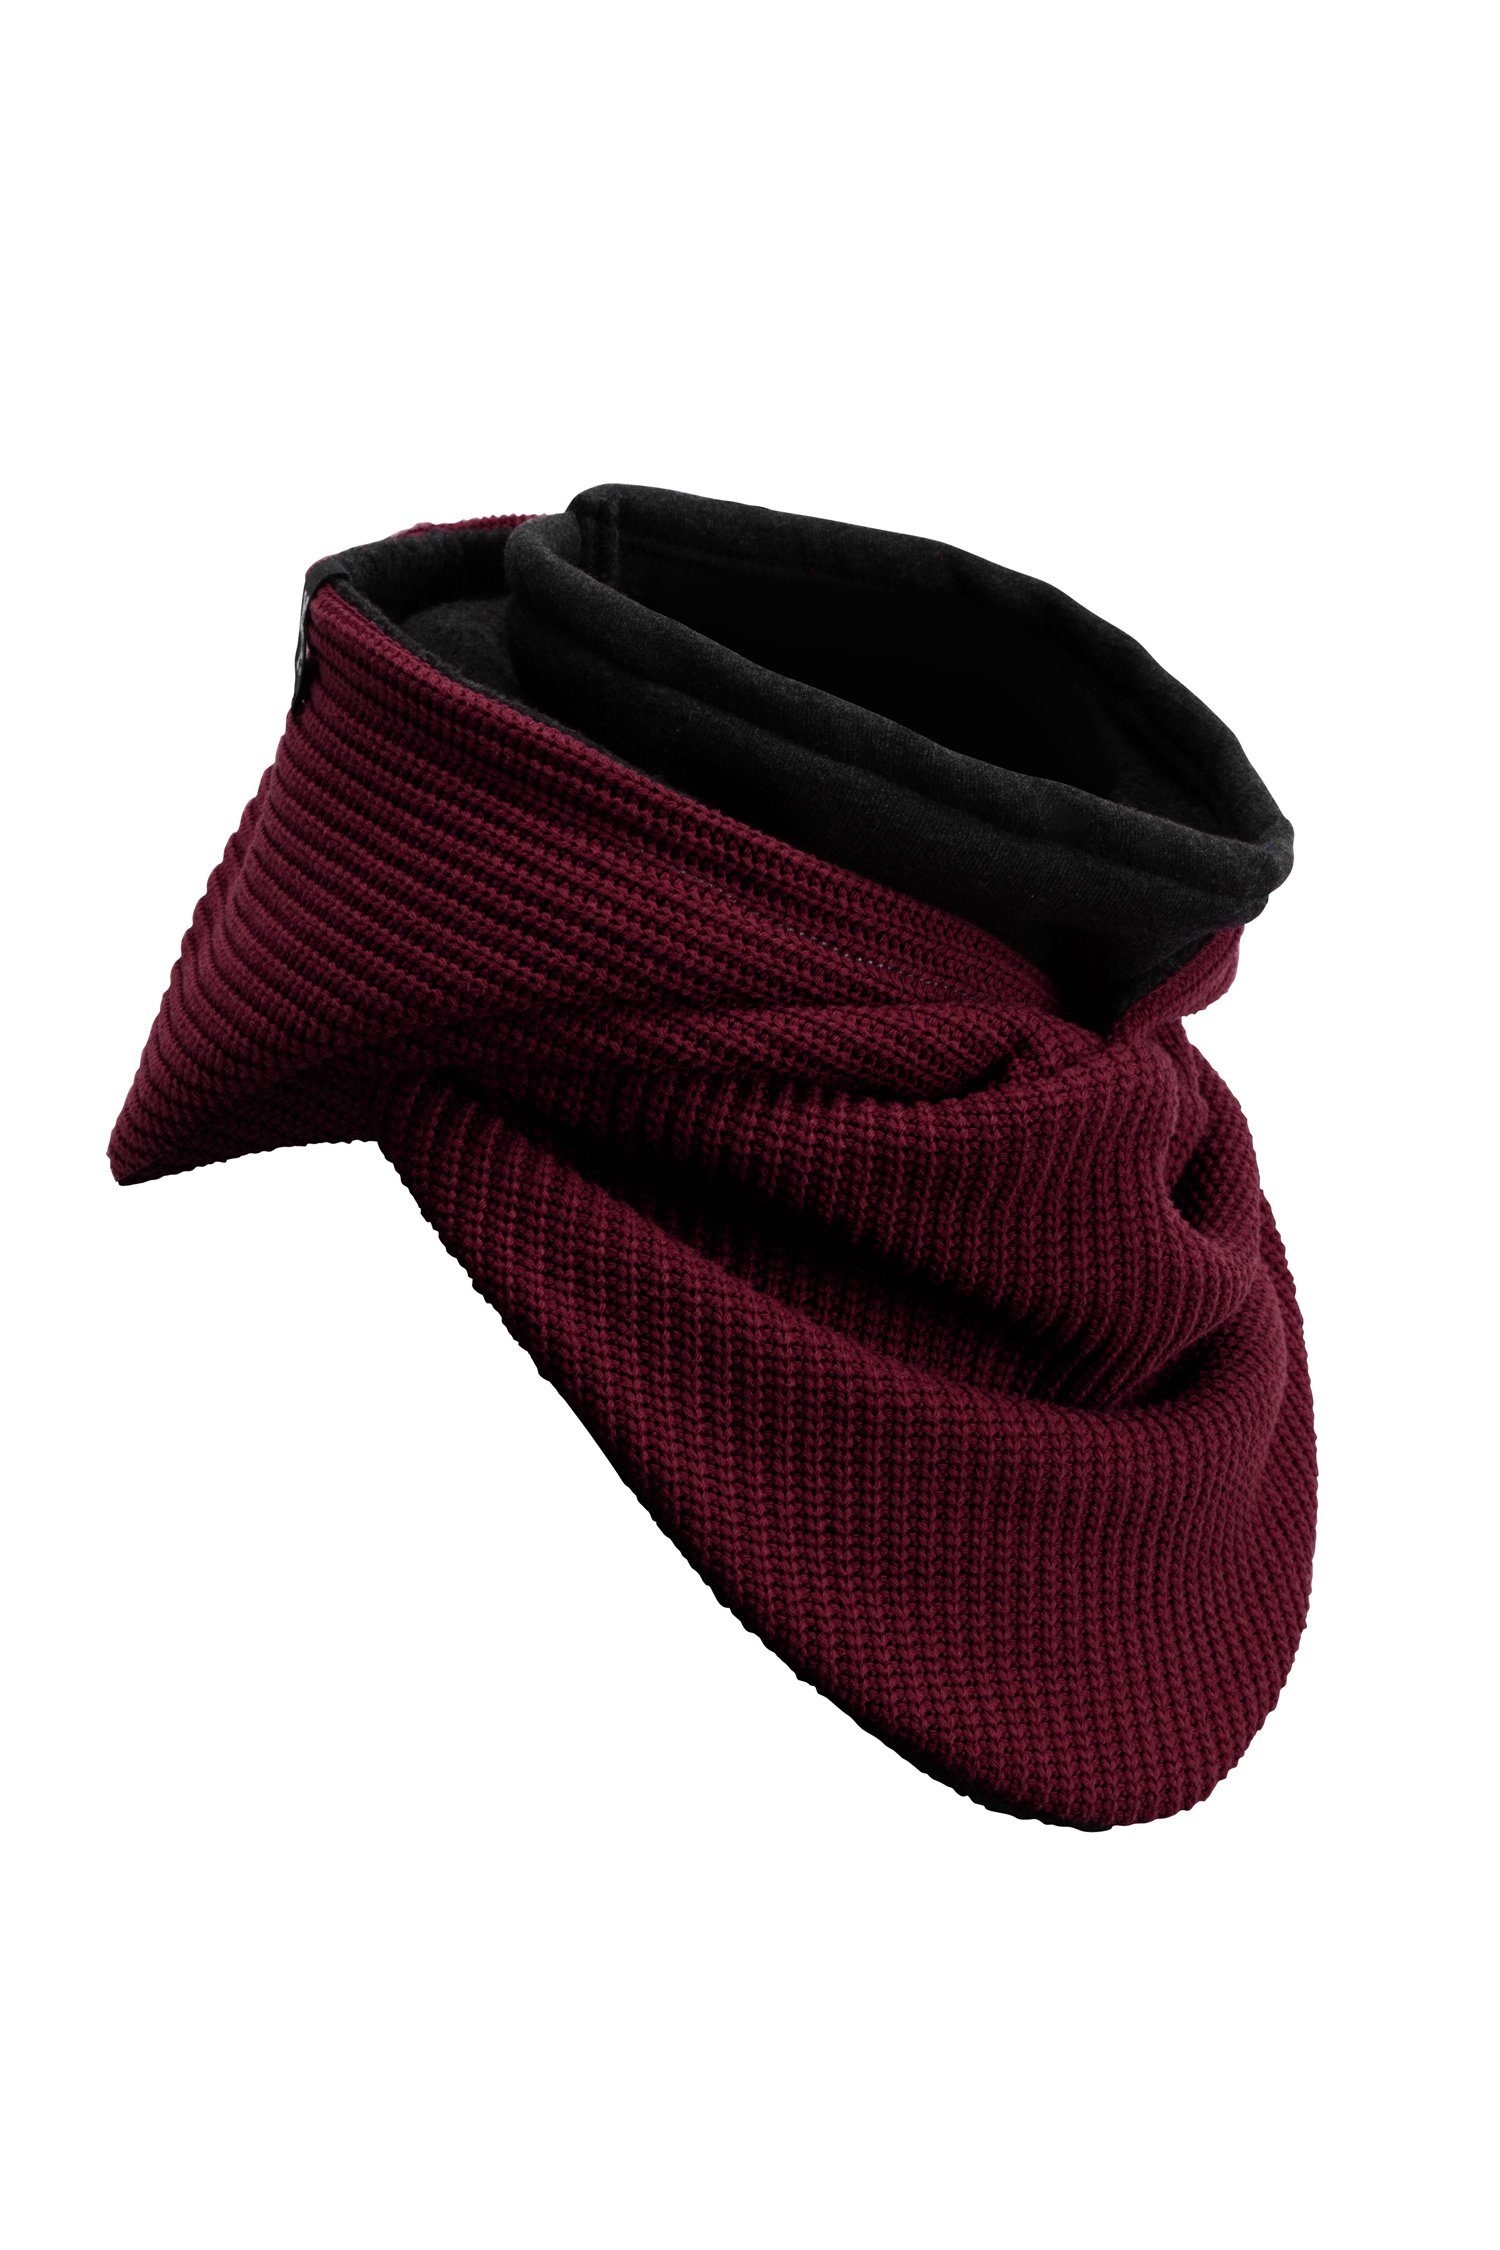 Manufaktur13 Modeschal Knit Hooded Loop Schal, - Strickschal, mit integriertem Bordeaux Kapuzenschal, Windbreaker